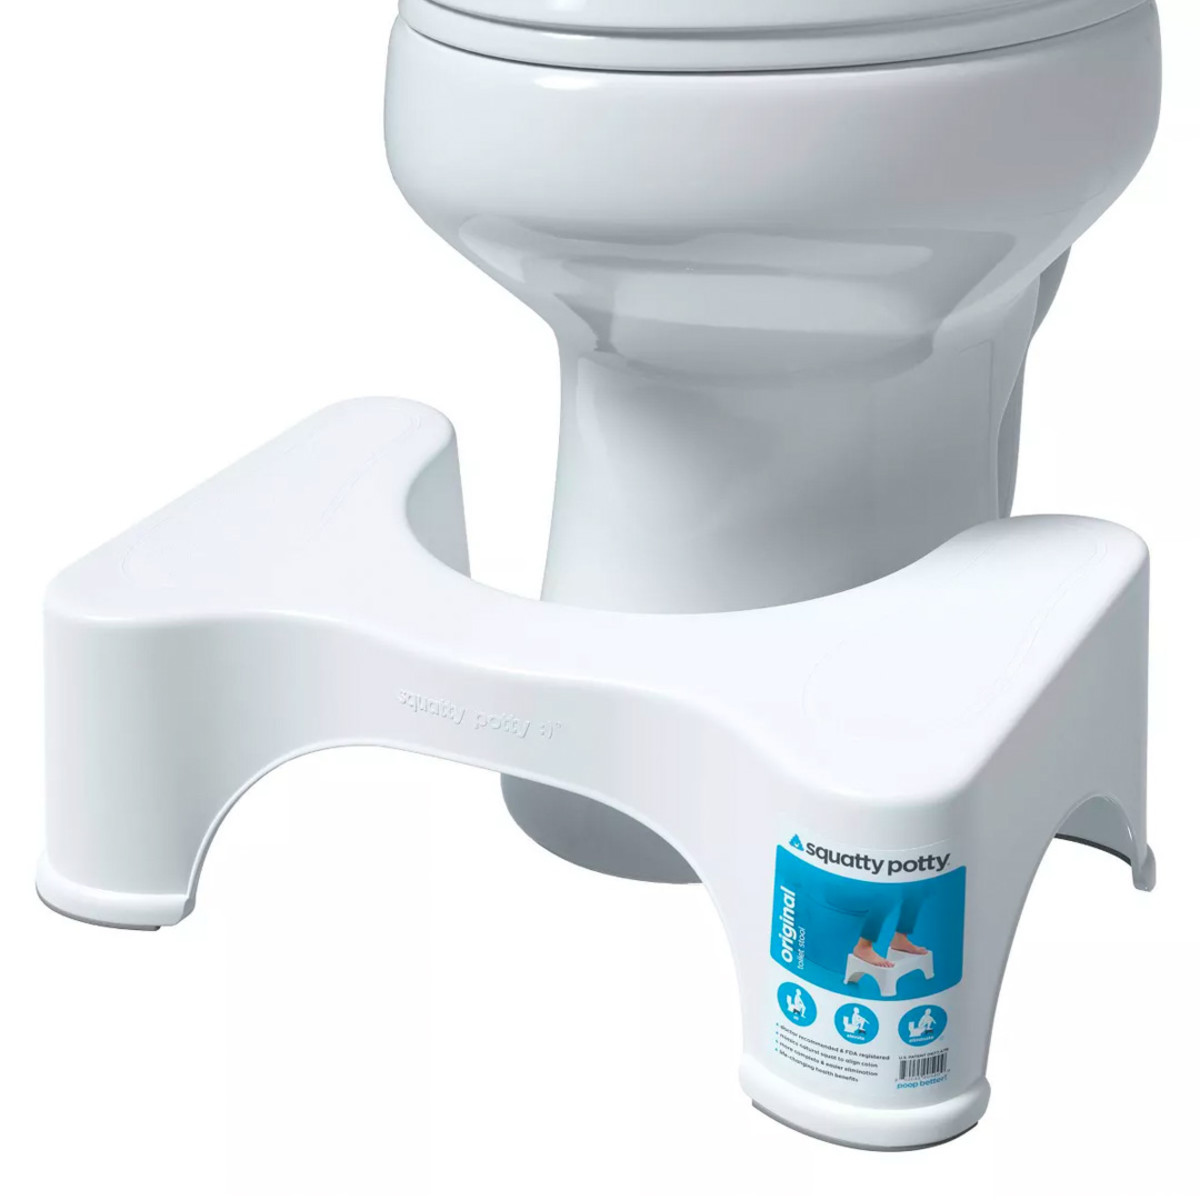 https://www.mensjournal.com/.image/t_share/MjAxOTExMjM1Mjk3MzU1NTU0/the-original-bathroom-toilet-stool-white---squatty-potty.jpg